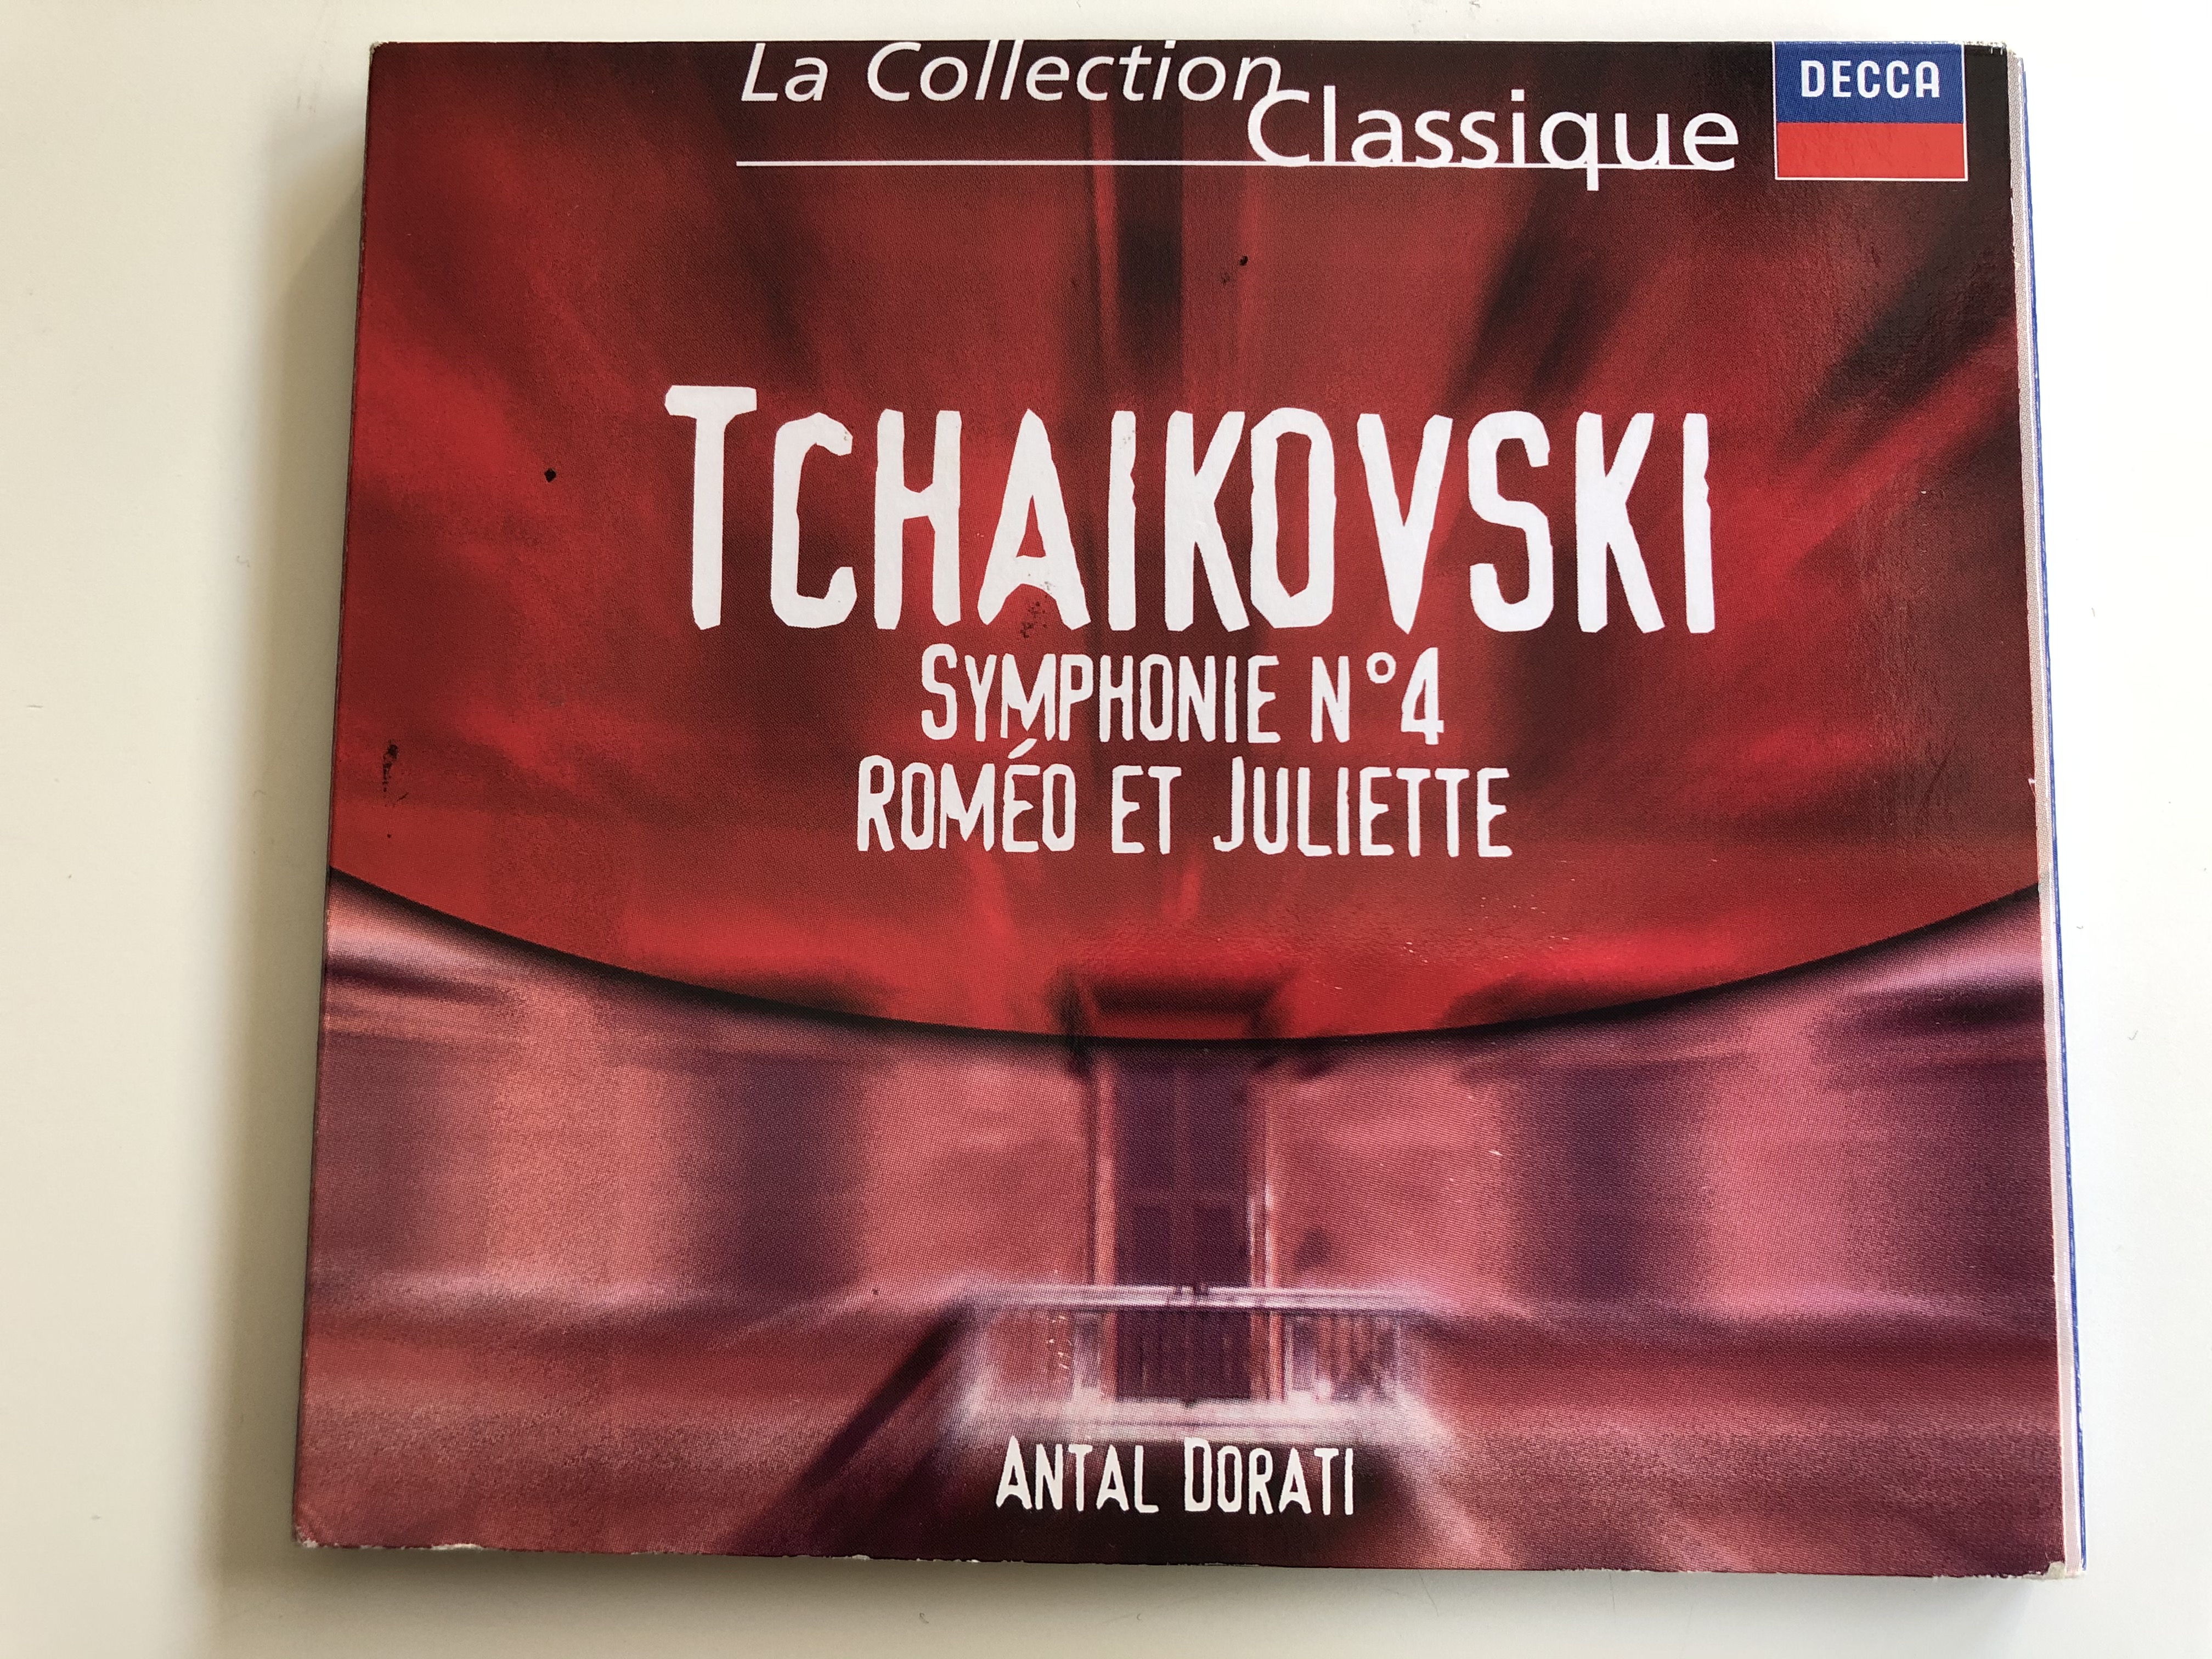 tchaikovsky-symphony-n-4-rom-o-et-juliette-antal-dorati-la-collection-classique-decca-audio-cd-stereo-466-548-2-1-.jpg